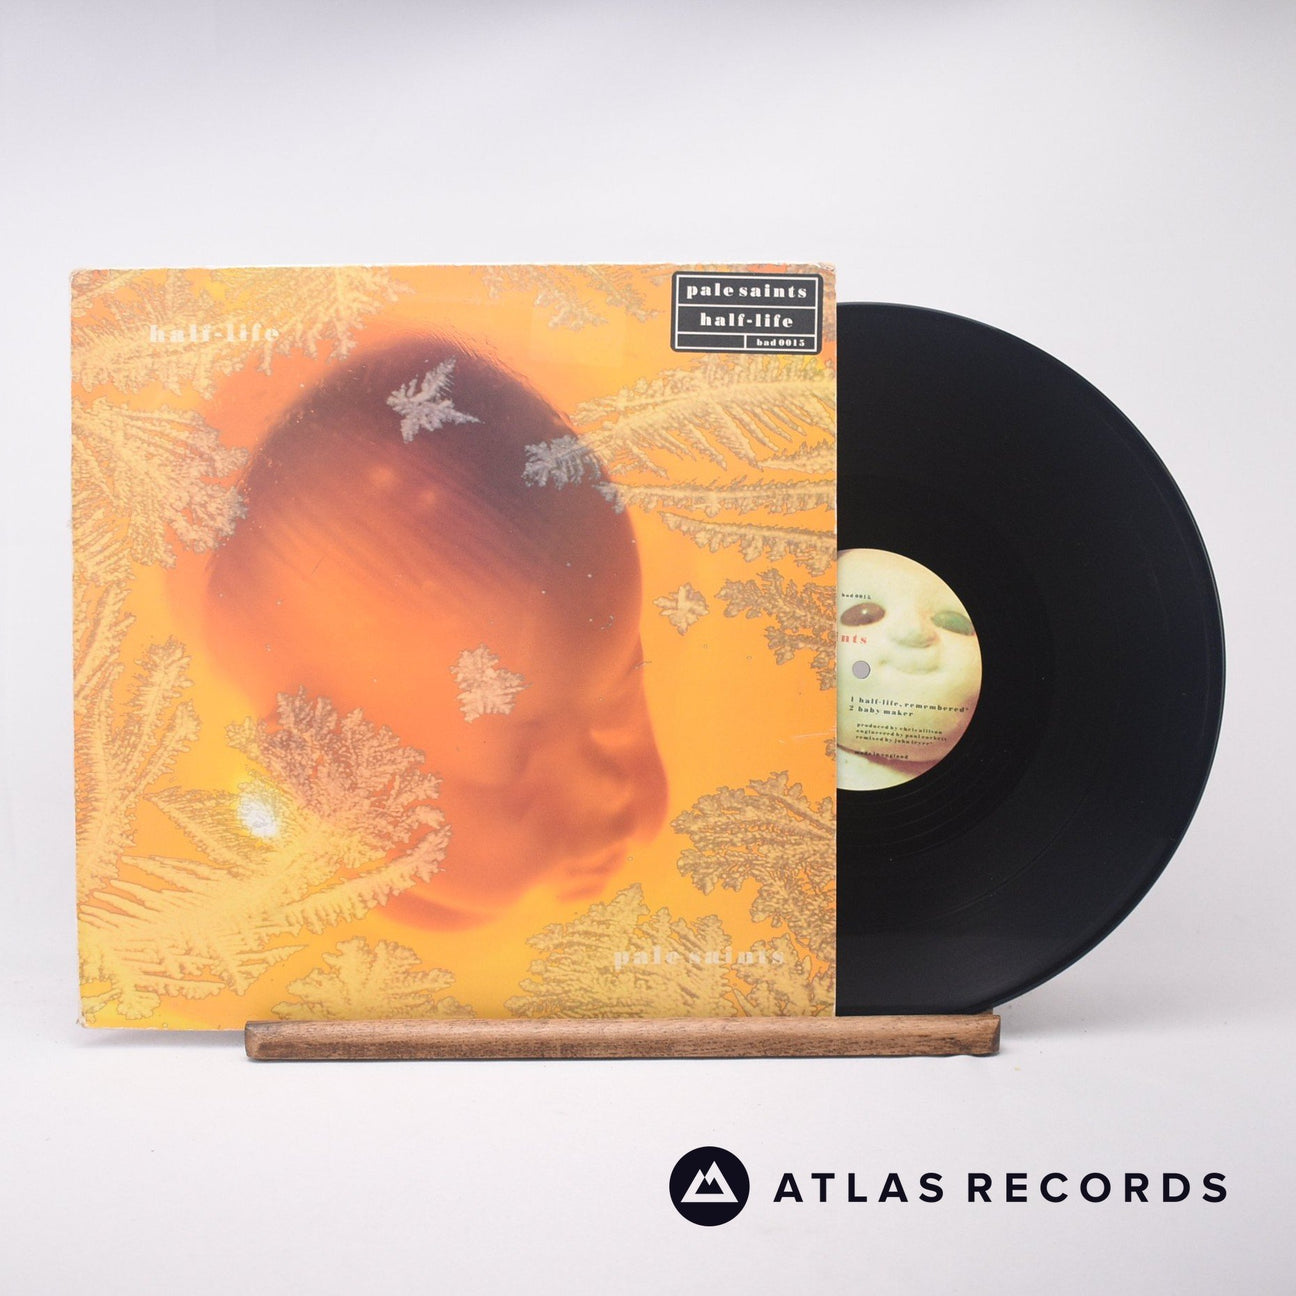 Pale Saints Half-Life 12" Vinyl Record - Front Cover & Record